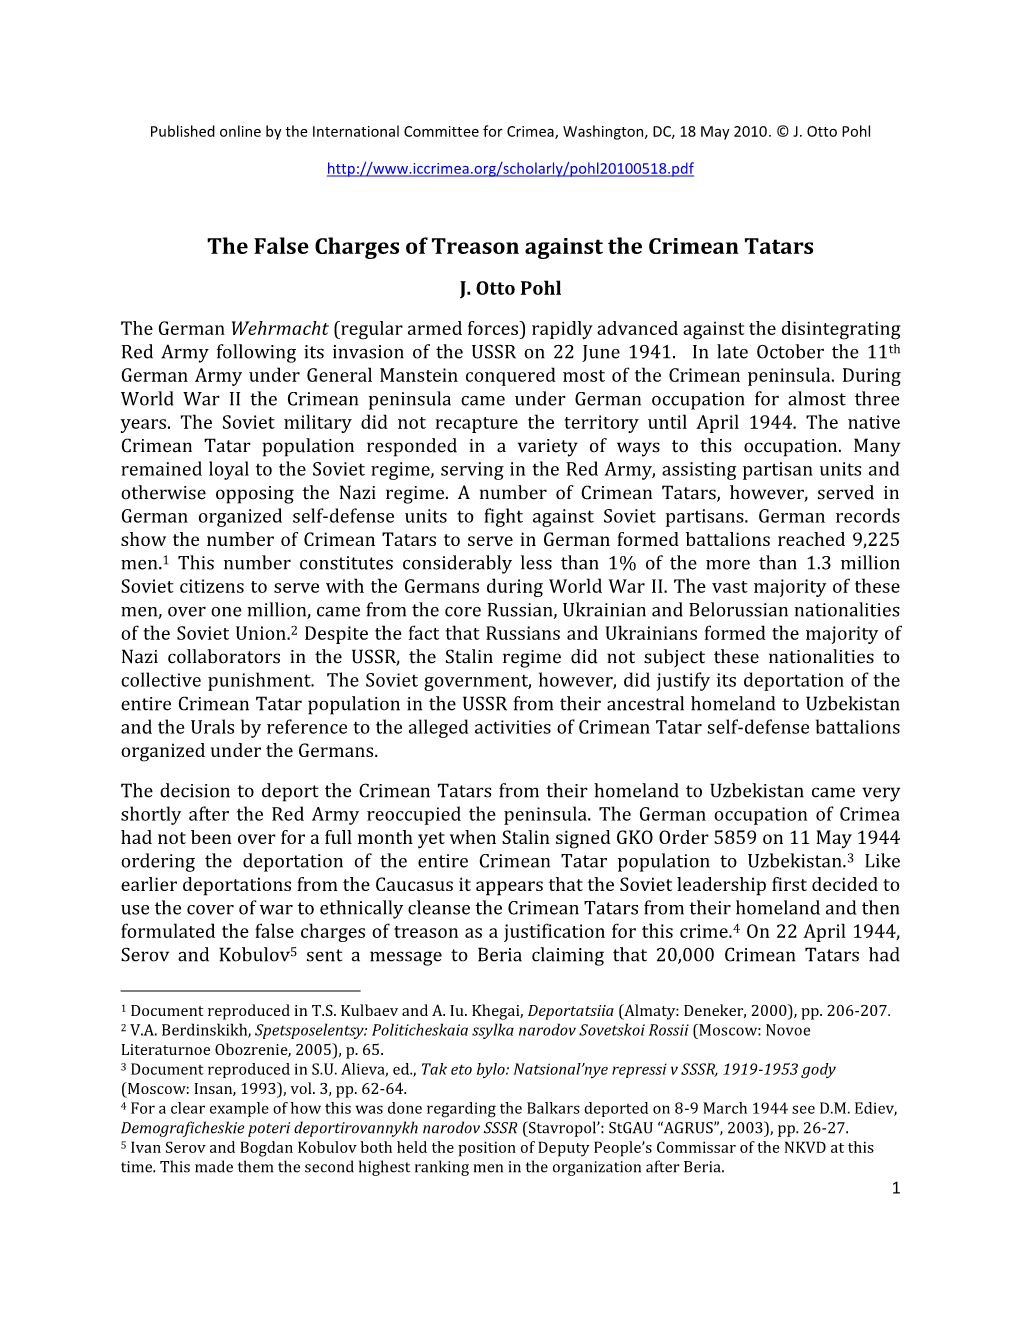 The False Charges of Treason Against the Crimean Tatars